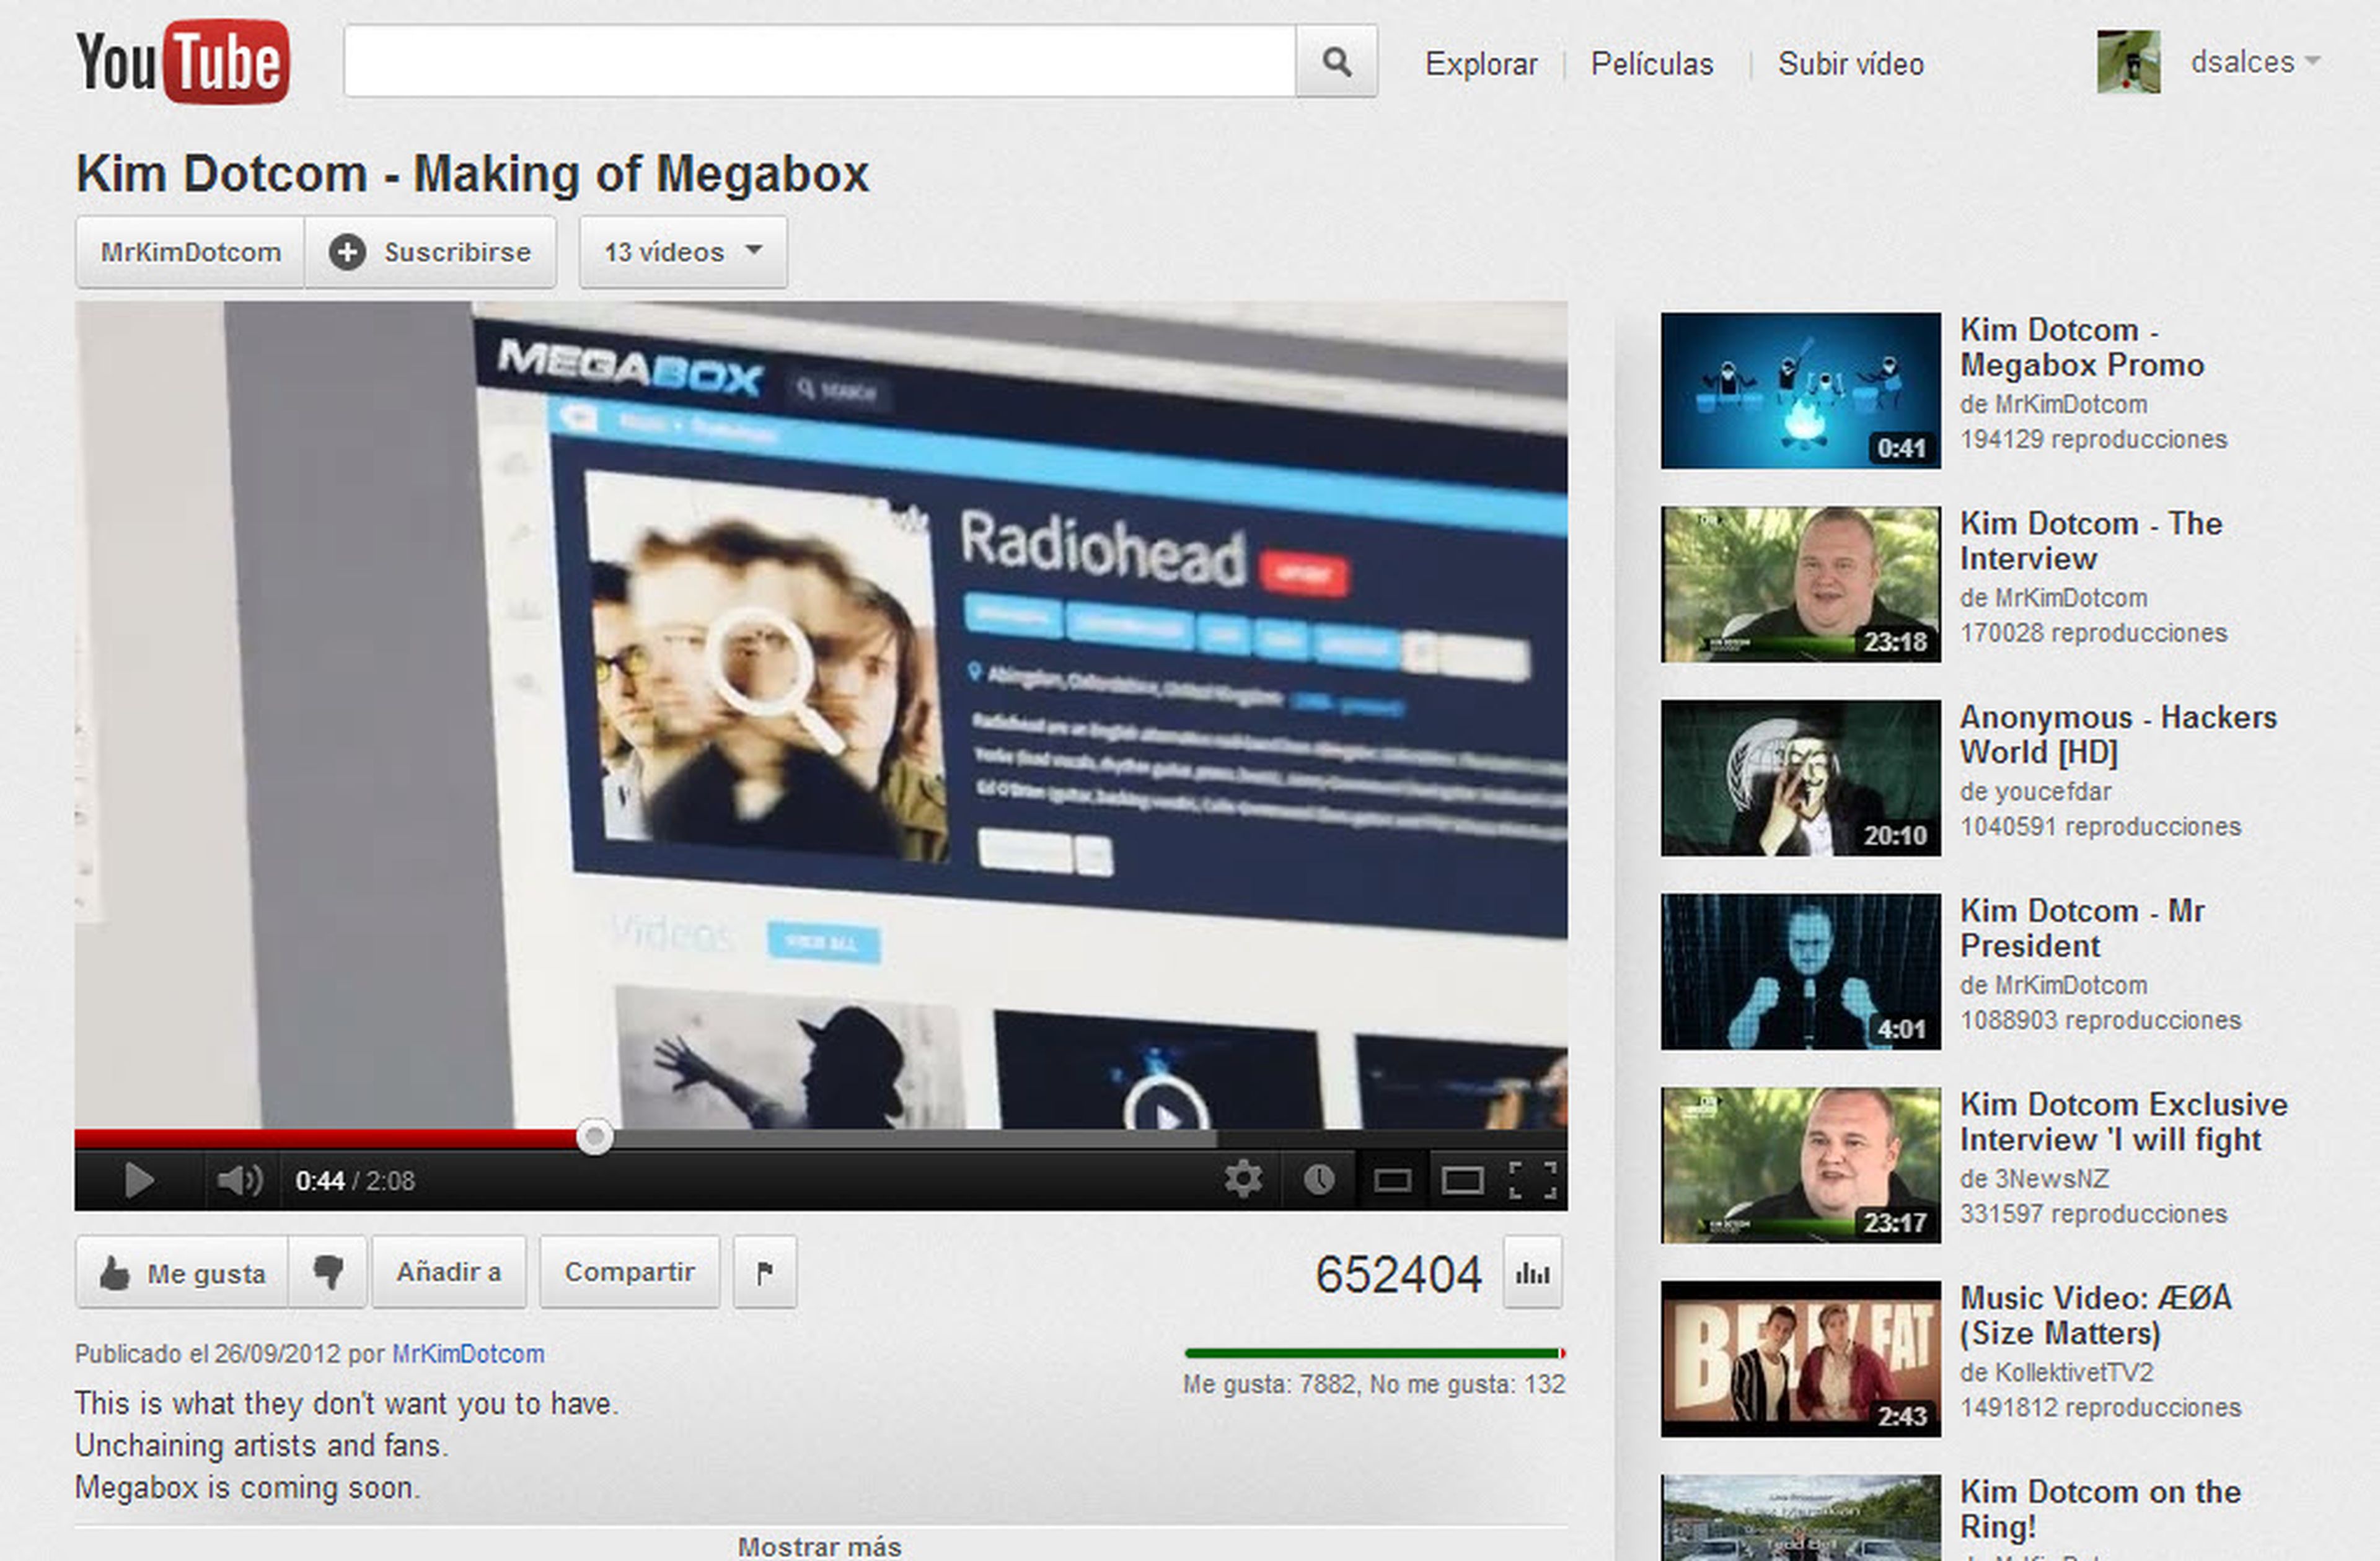 Vídeo de presentación de Megabox en Youtube